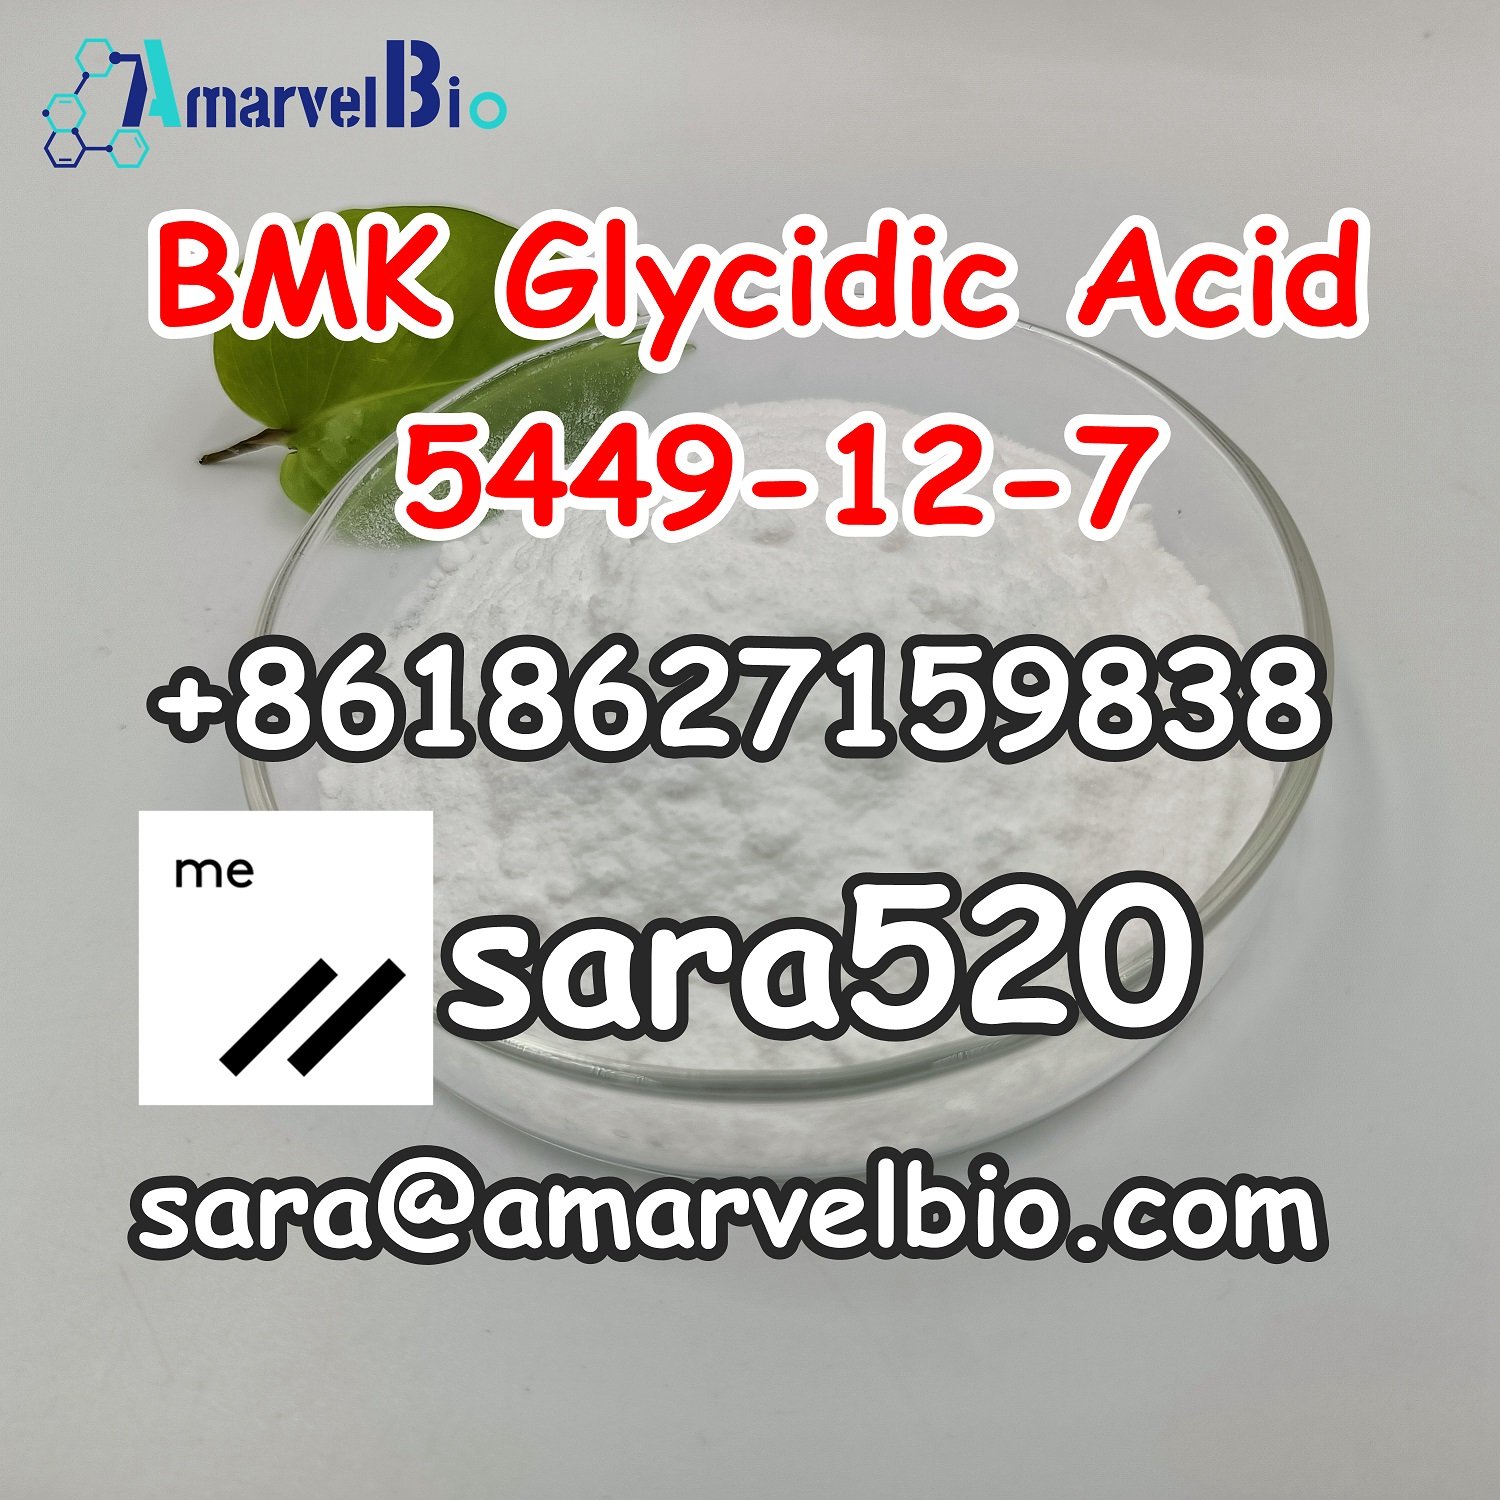 (Wickr: sara520) BMK Glycidic Acid (sodium salt) CAS 5449-12-7